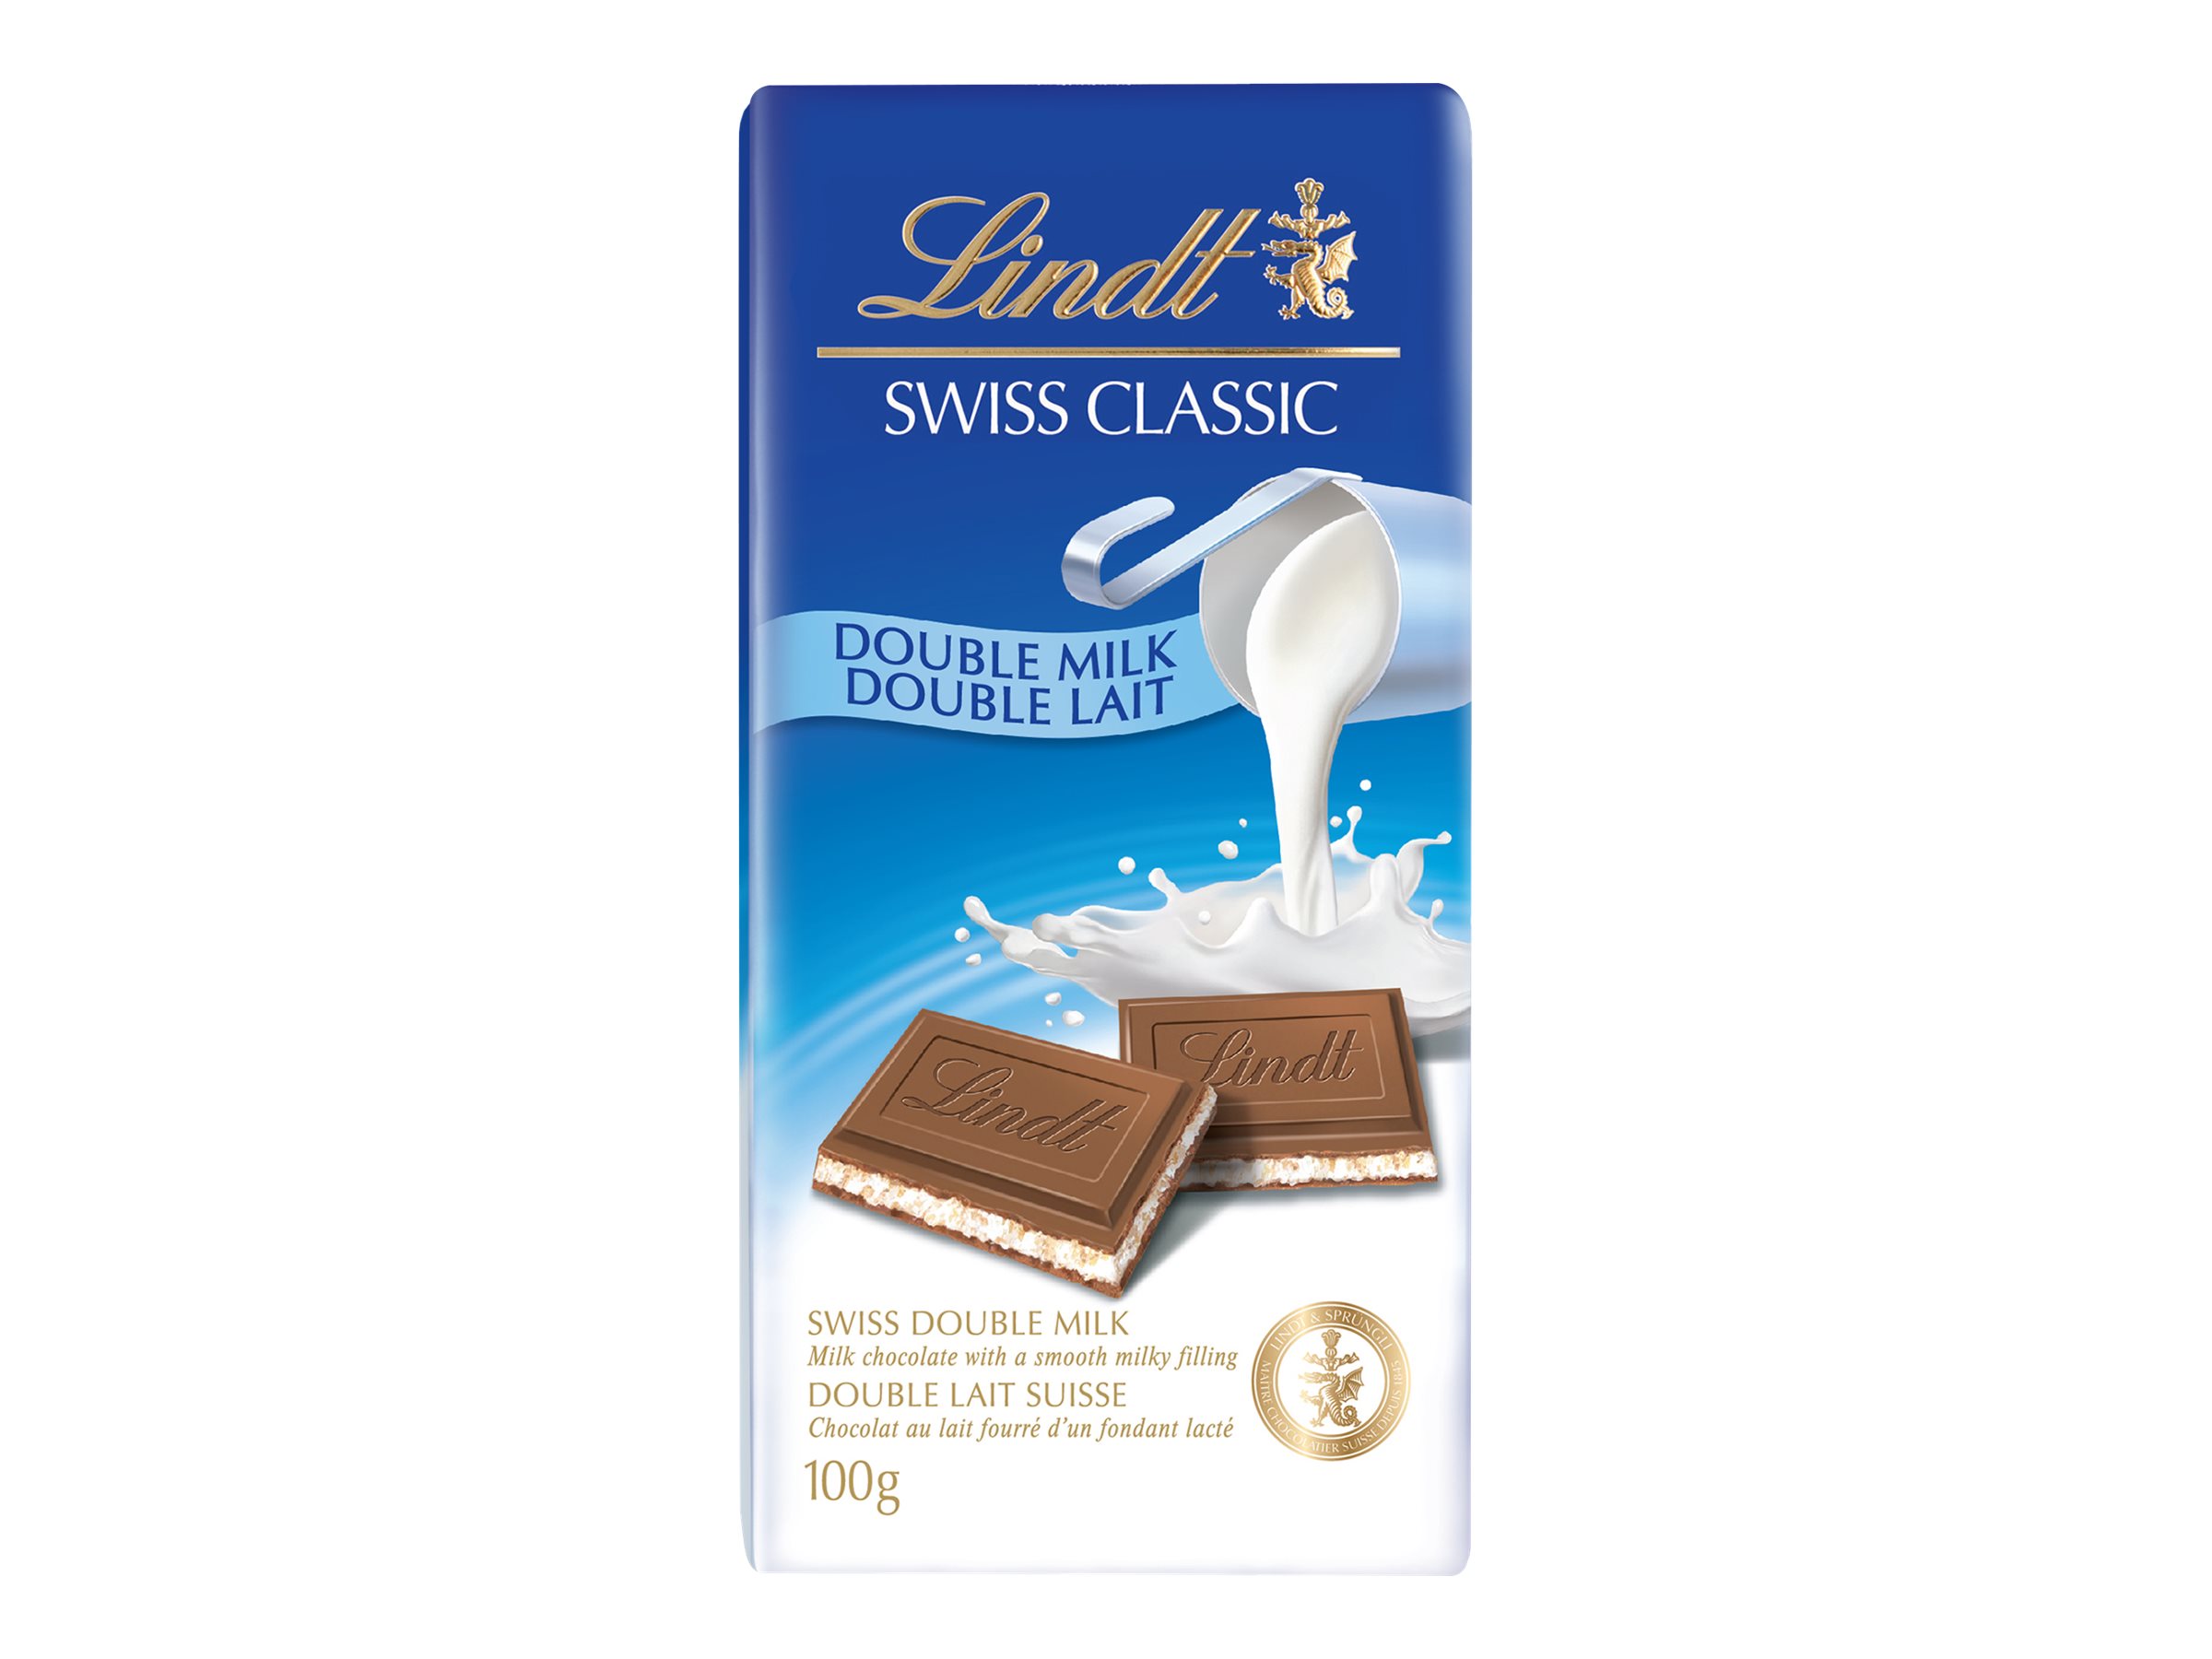 Lindt Swiss Classic Milk Chocolate Bar - Double Milk - 100g